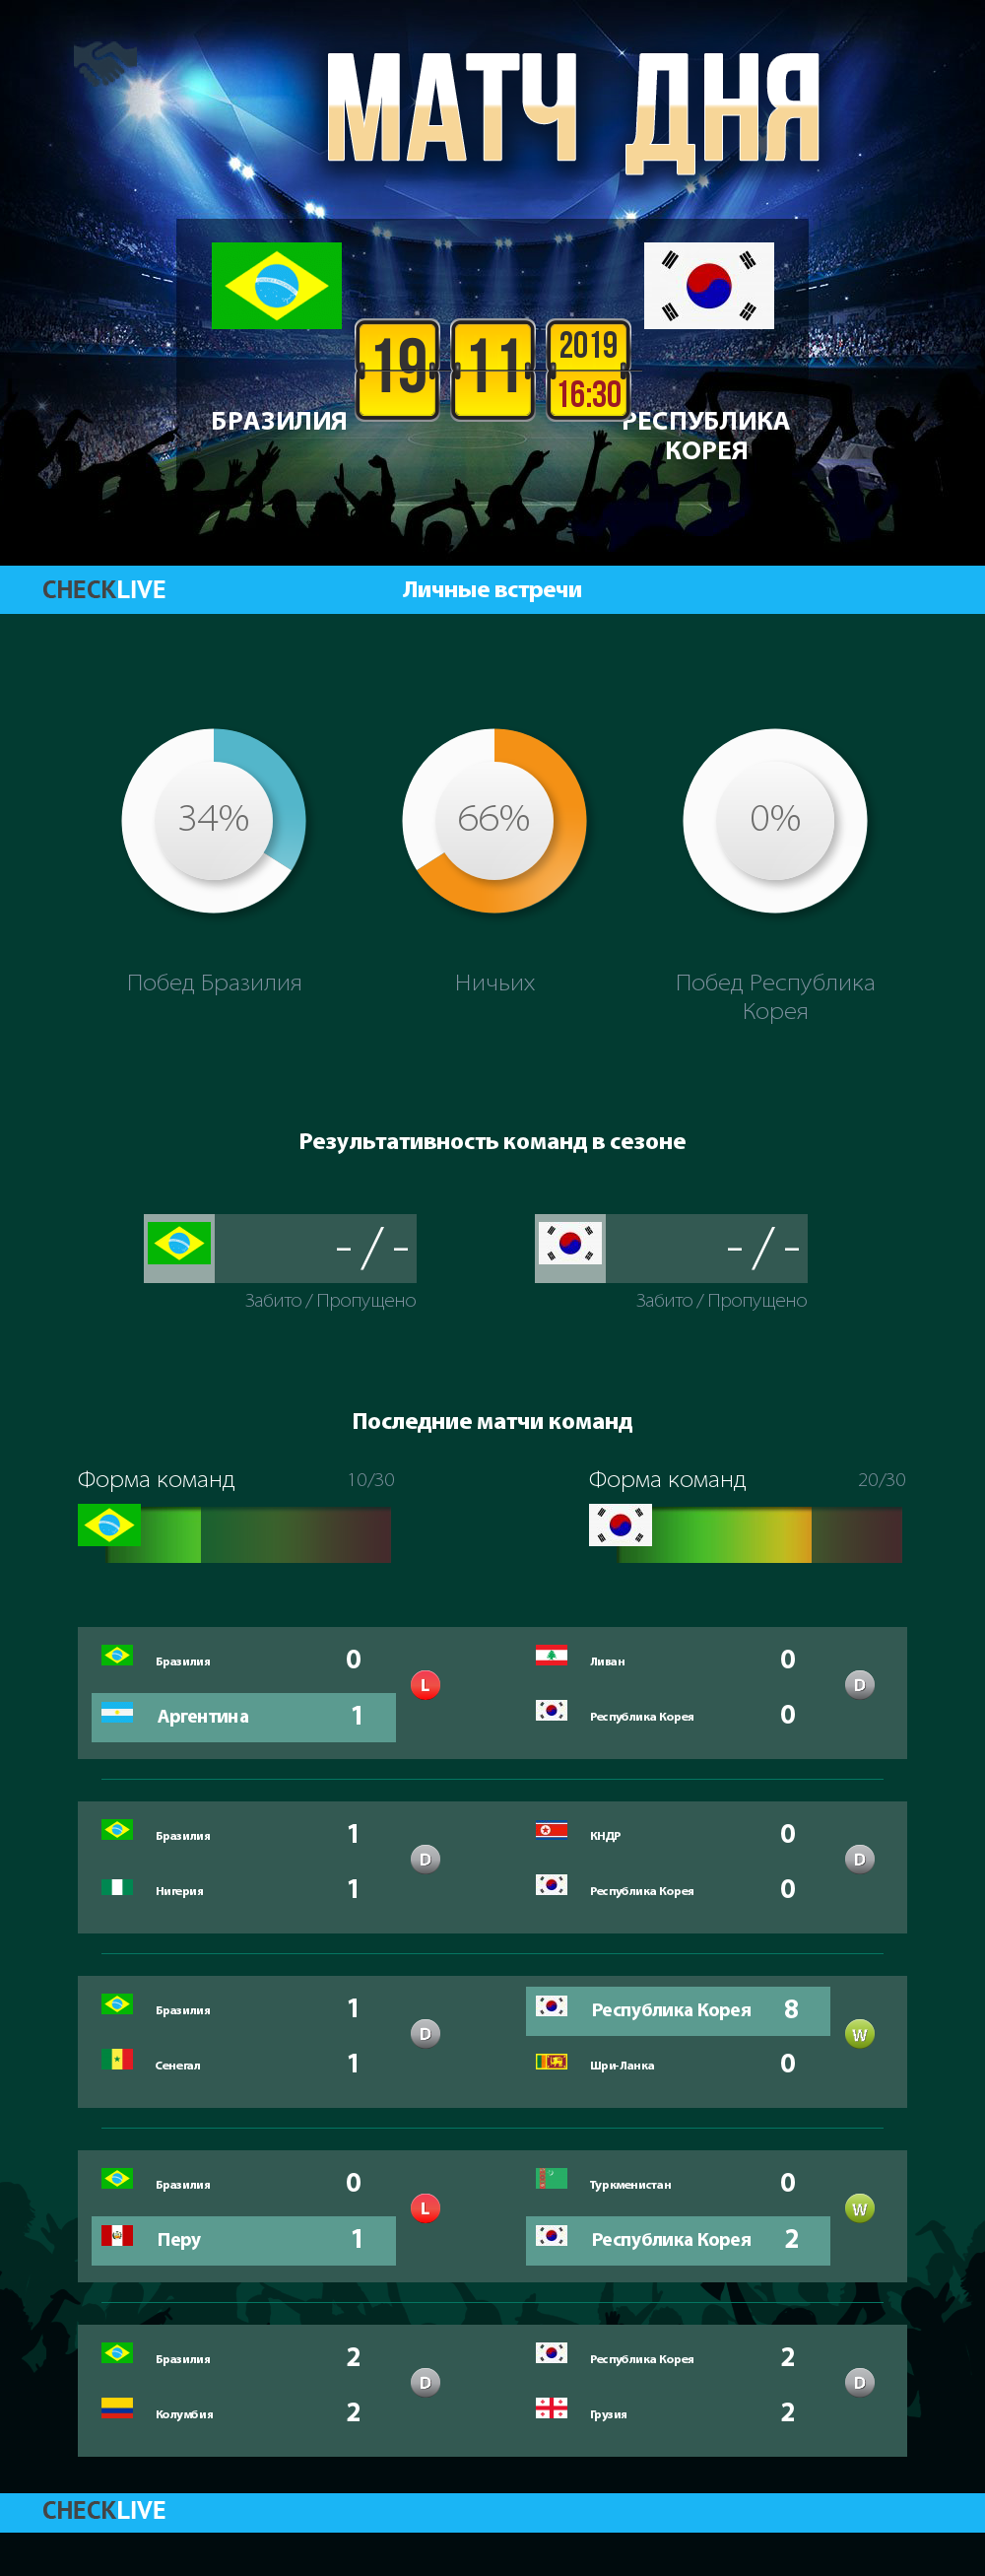 Инфографика Бразилия и Республика Корея матч дня 19.11.2019